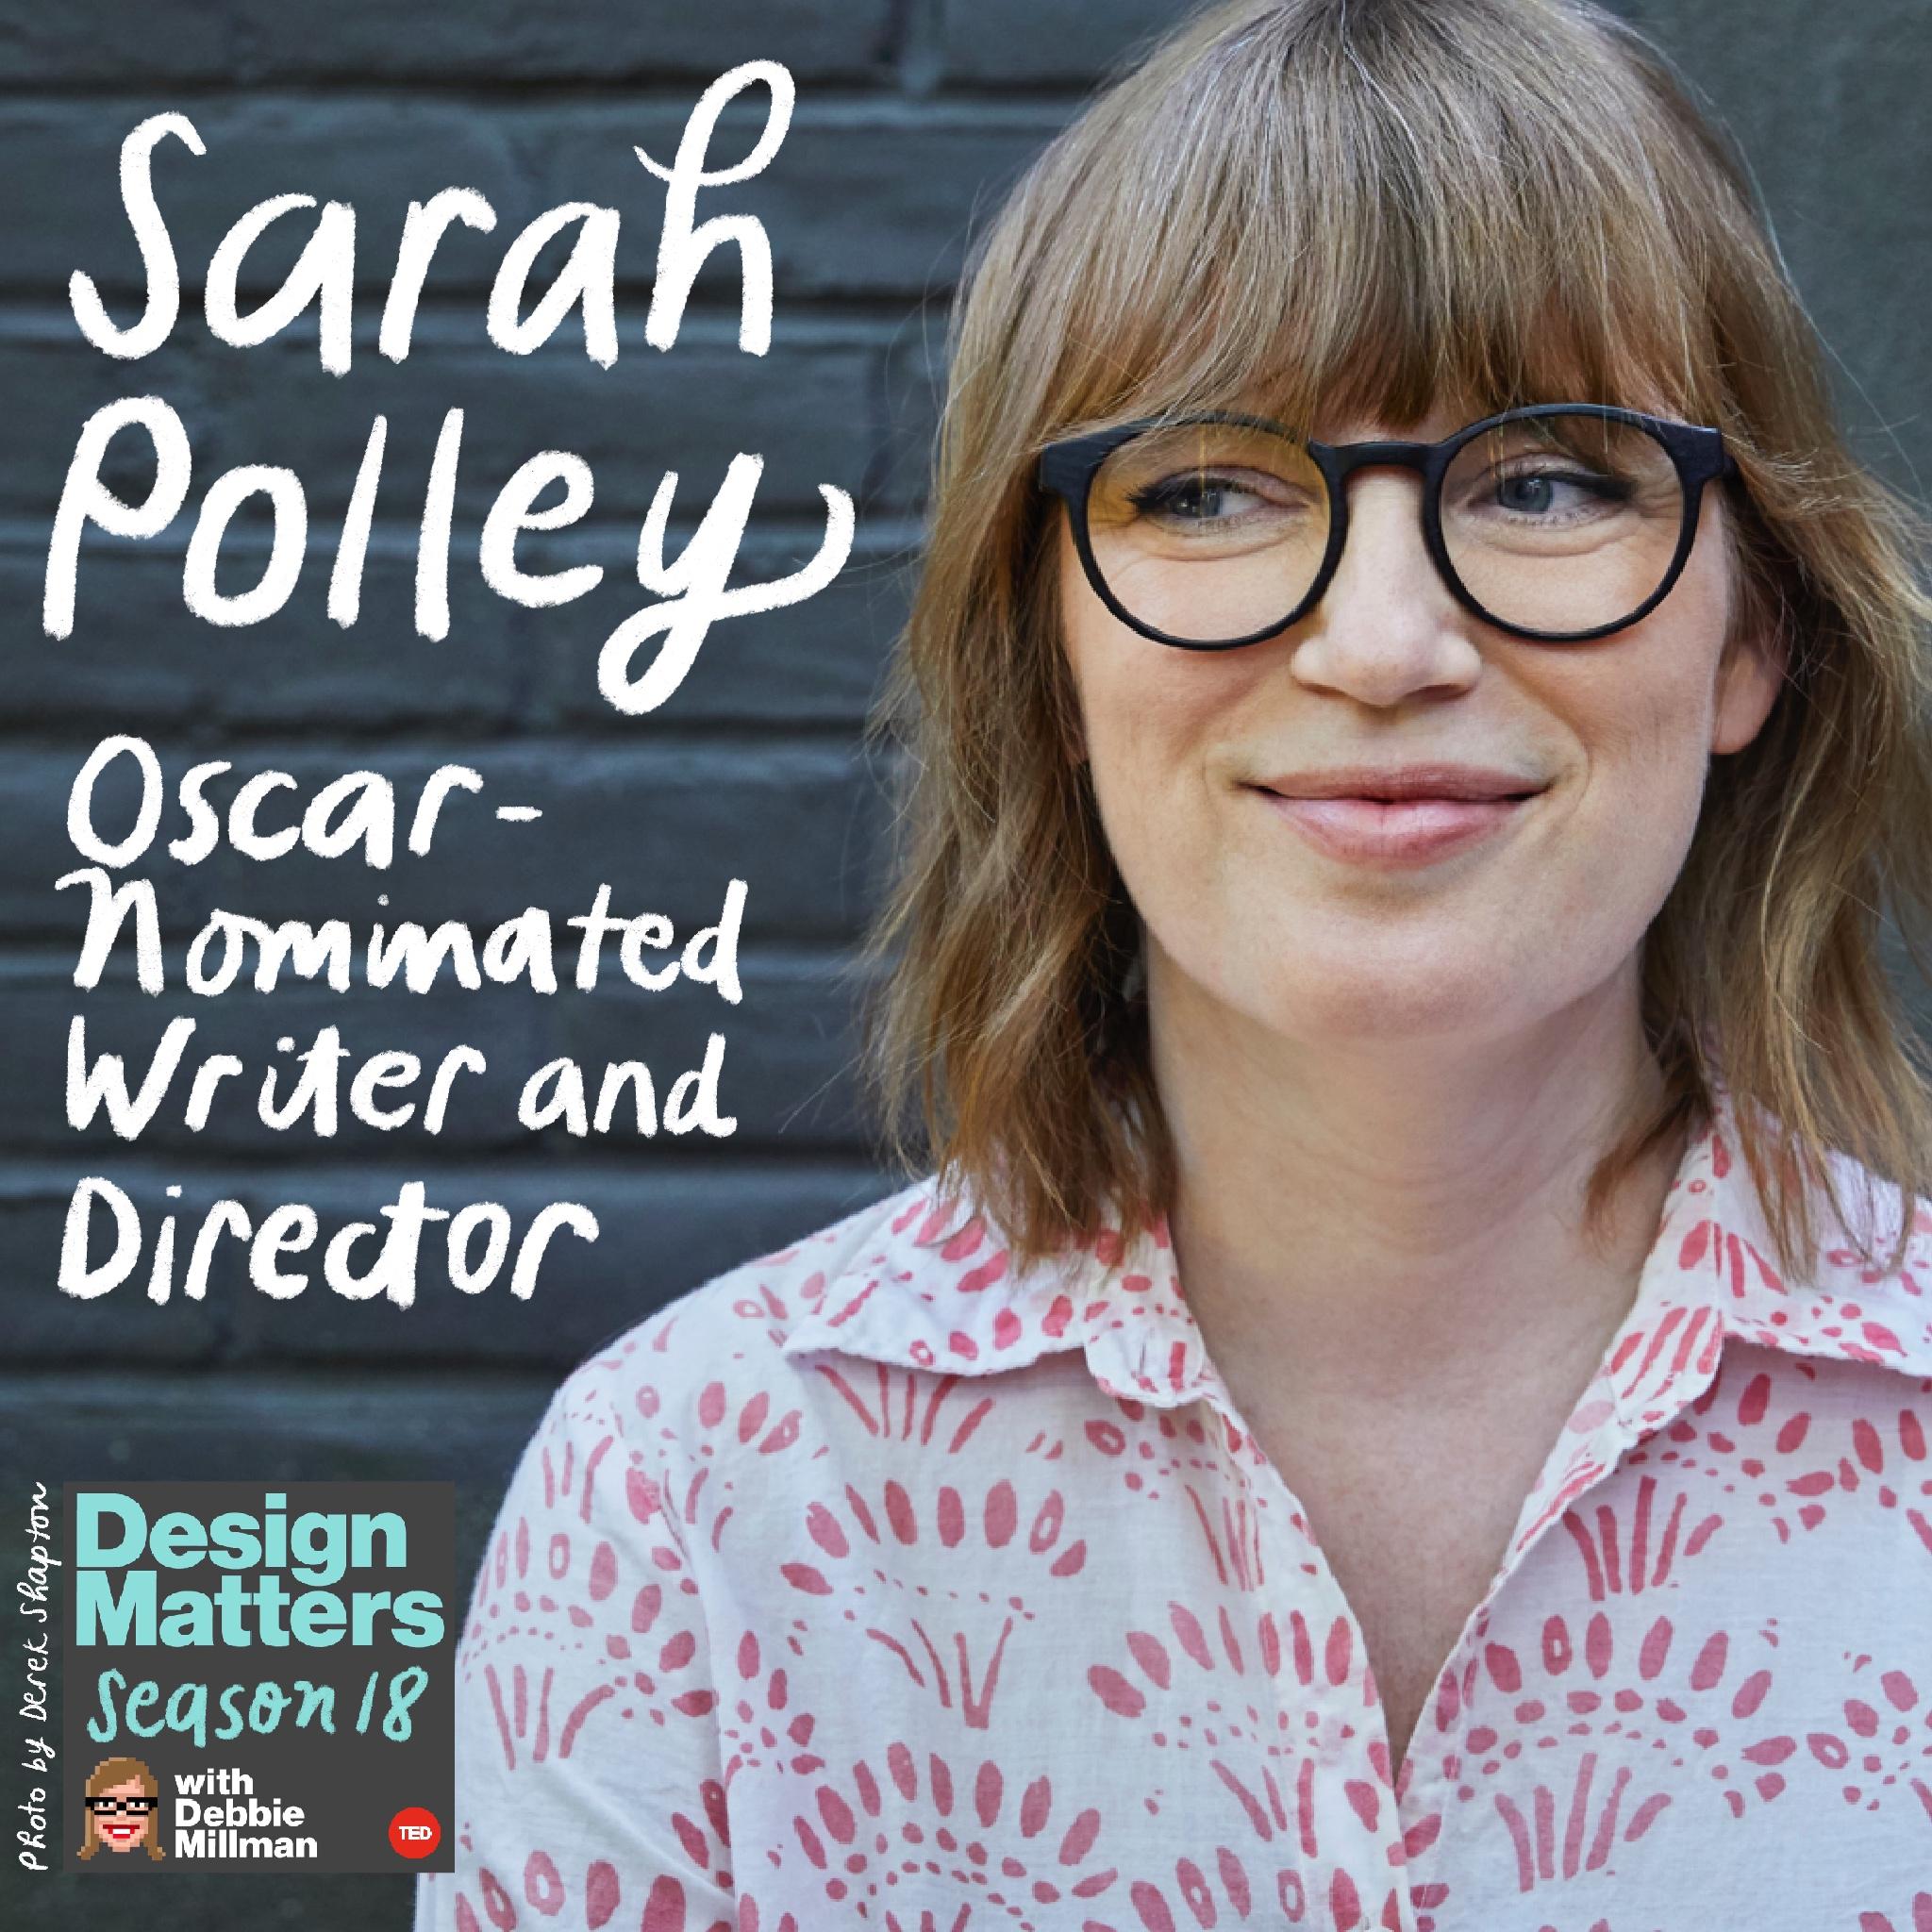 Thumbnail for "Sarah Polley".